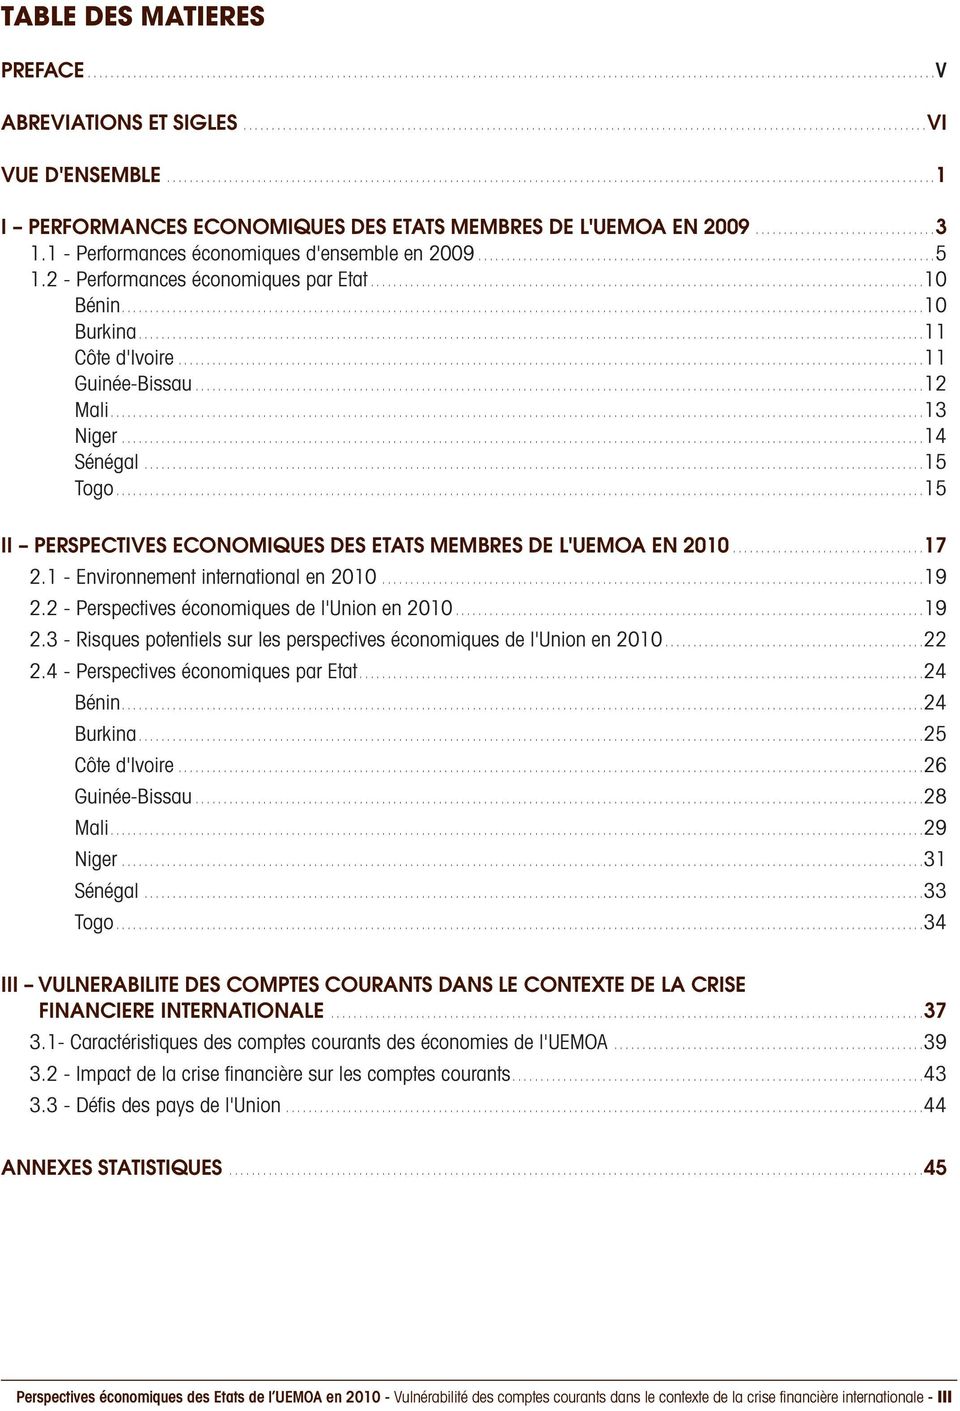 ..15 II PERSPECTIVES ECONOMIQUES DES ETATS MEMBRES DE L'UEMOA EN 2010...17 2.1 - Environnement international en 2010...19 2.2 - Perspectives économiques de l'union en 2010...19 2.3 - Risques potentiels sur les perspectives économiques de l'union en 2010.